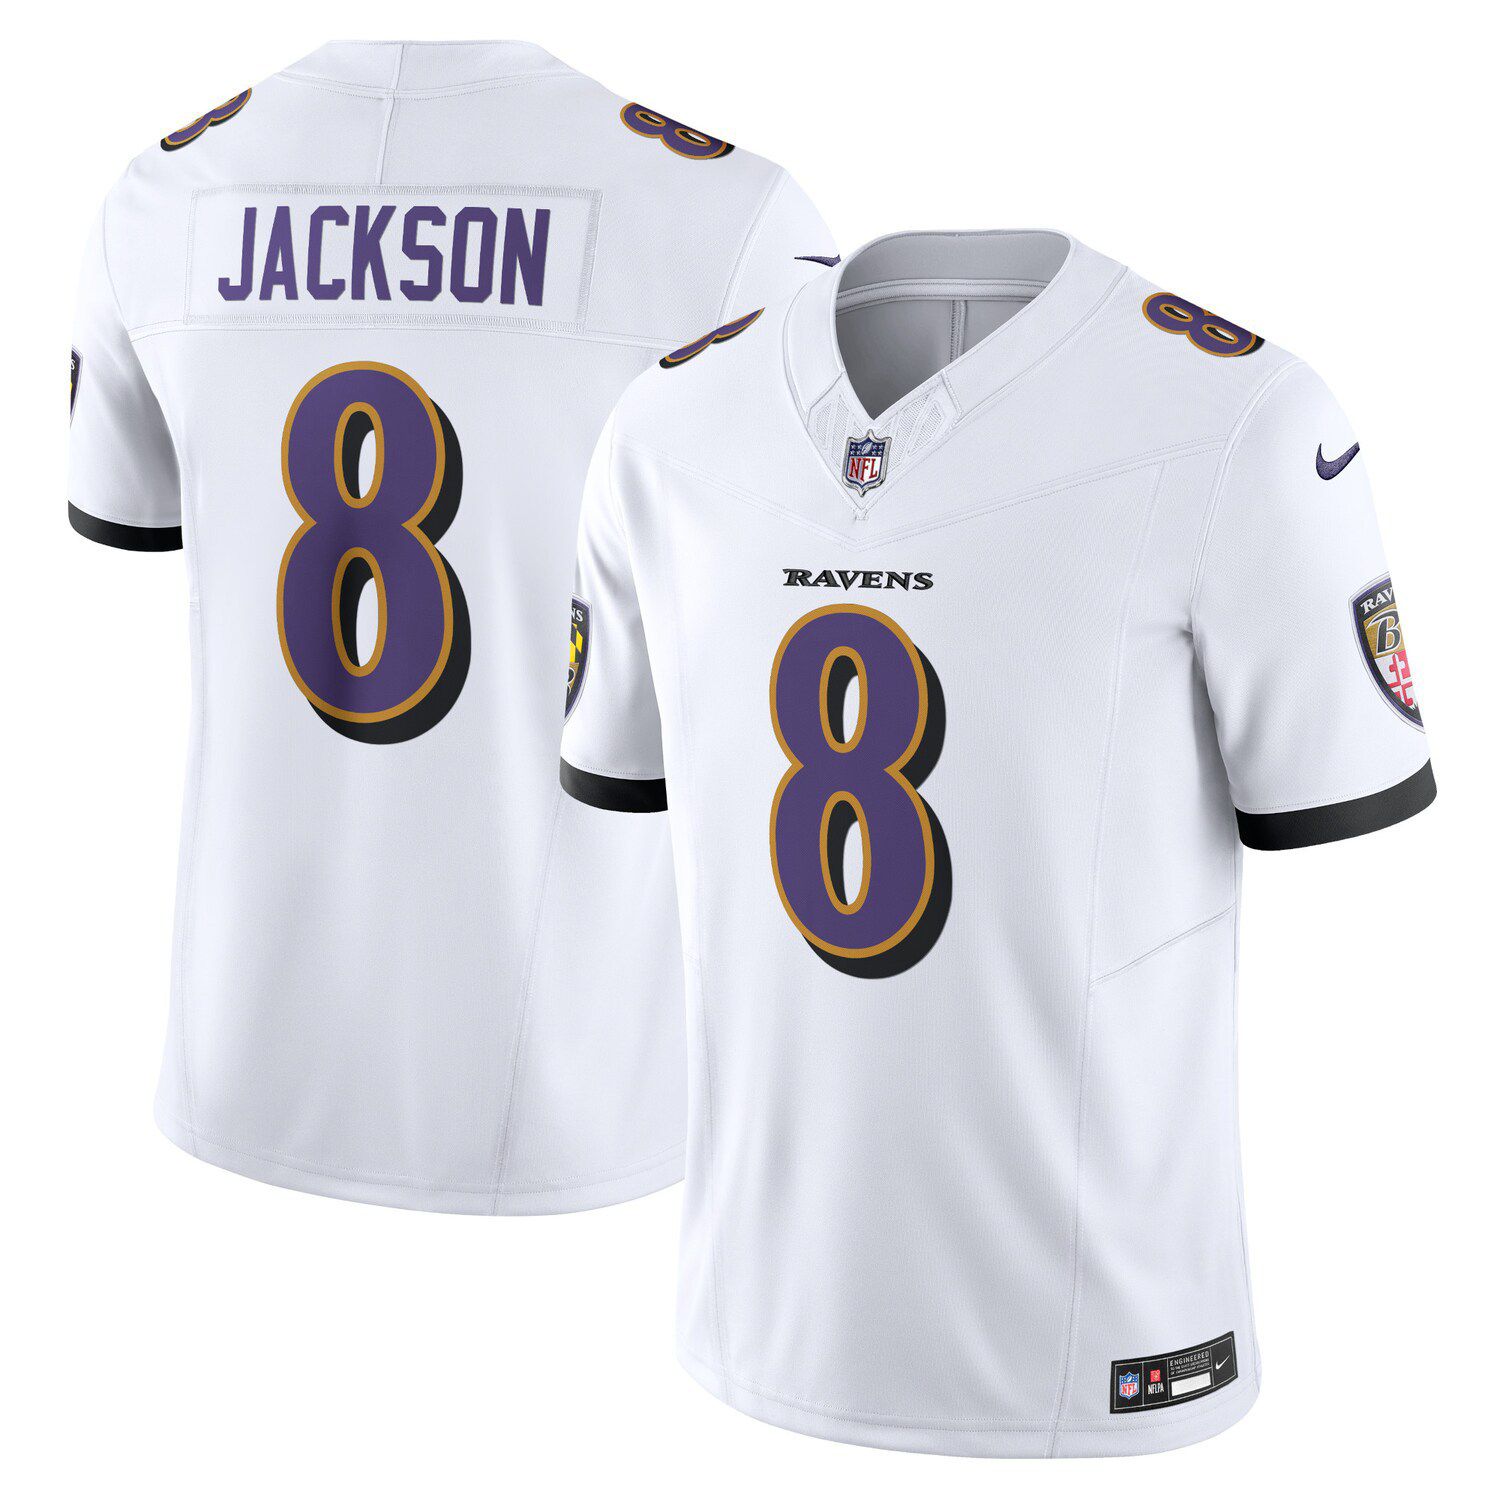 Large Nike (2020) Ravens Lamar Jackson Jersey AUTHENTIC SALUTE TO